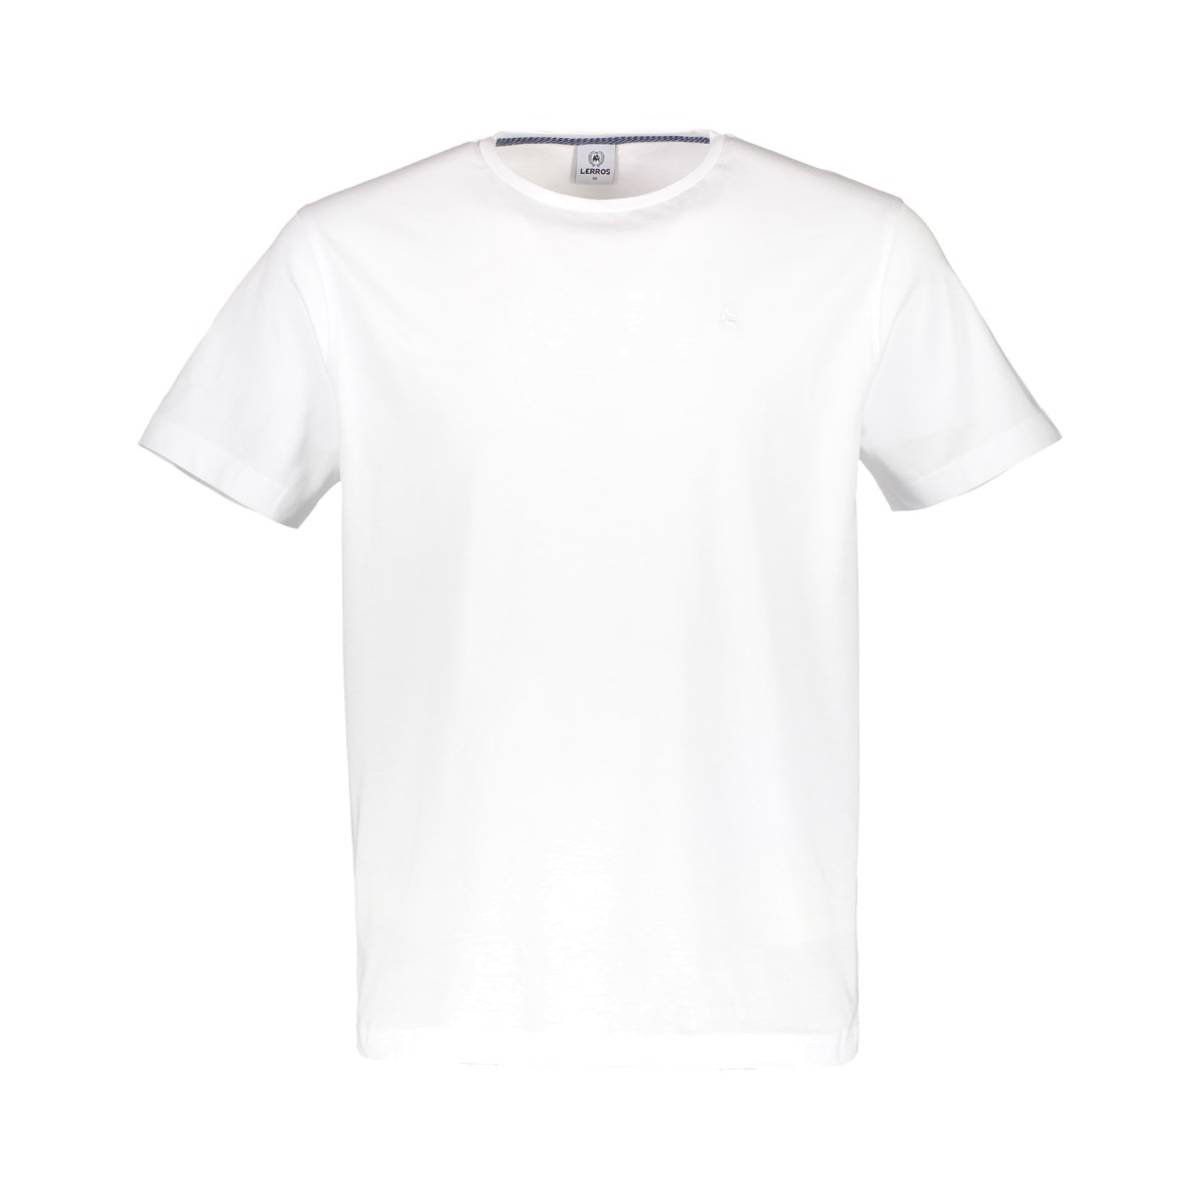 LERROS  t shirts wit -  model 2003000 - Herenkleding t shirts wit